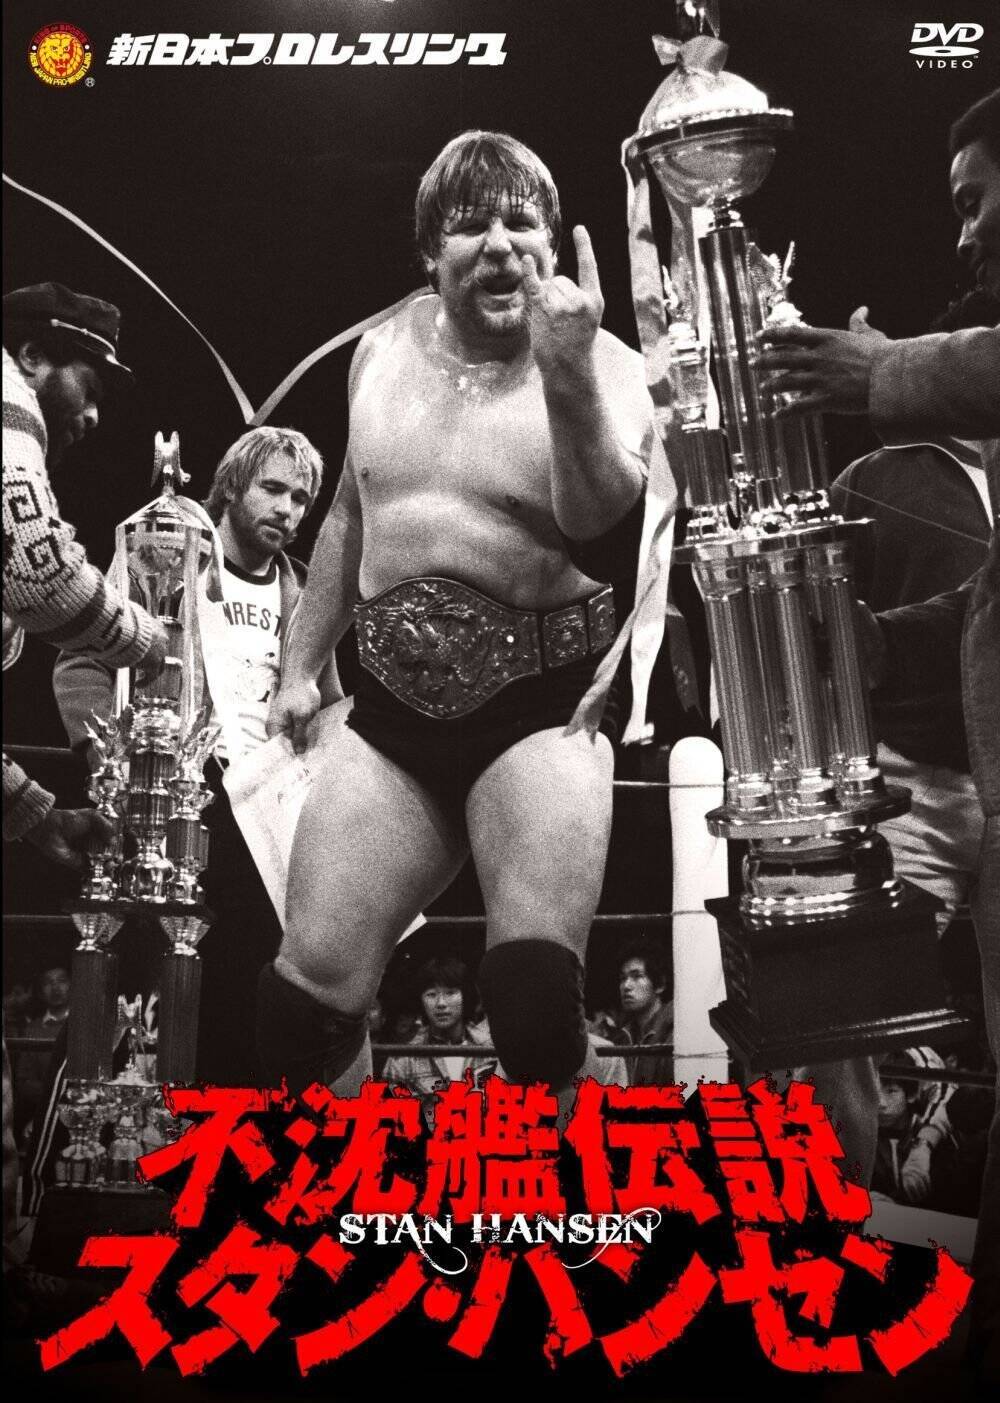 WWE殿堂入りを果たしたスタン・ハンセン「首折り事件」の真相は、もはやタブーではない